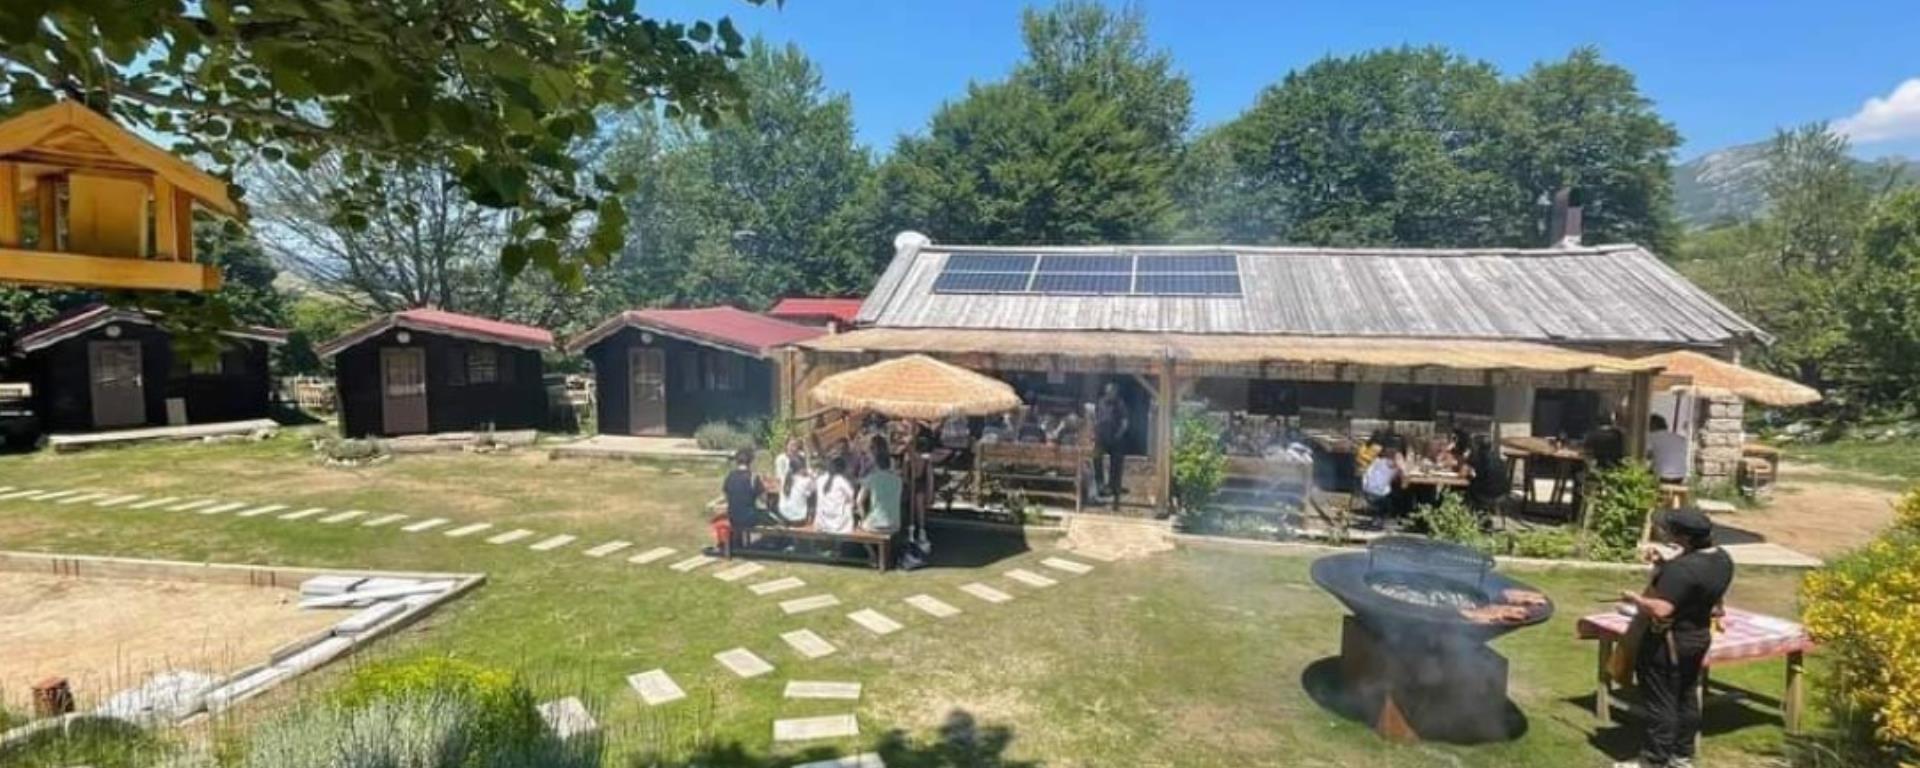 2021- Bergerie Basseta- jardin barbecue Amadei